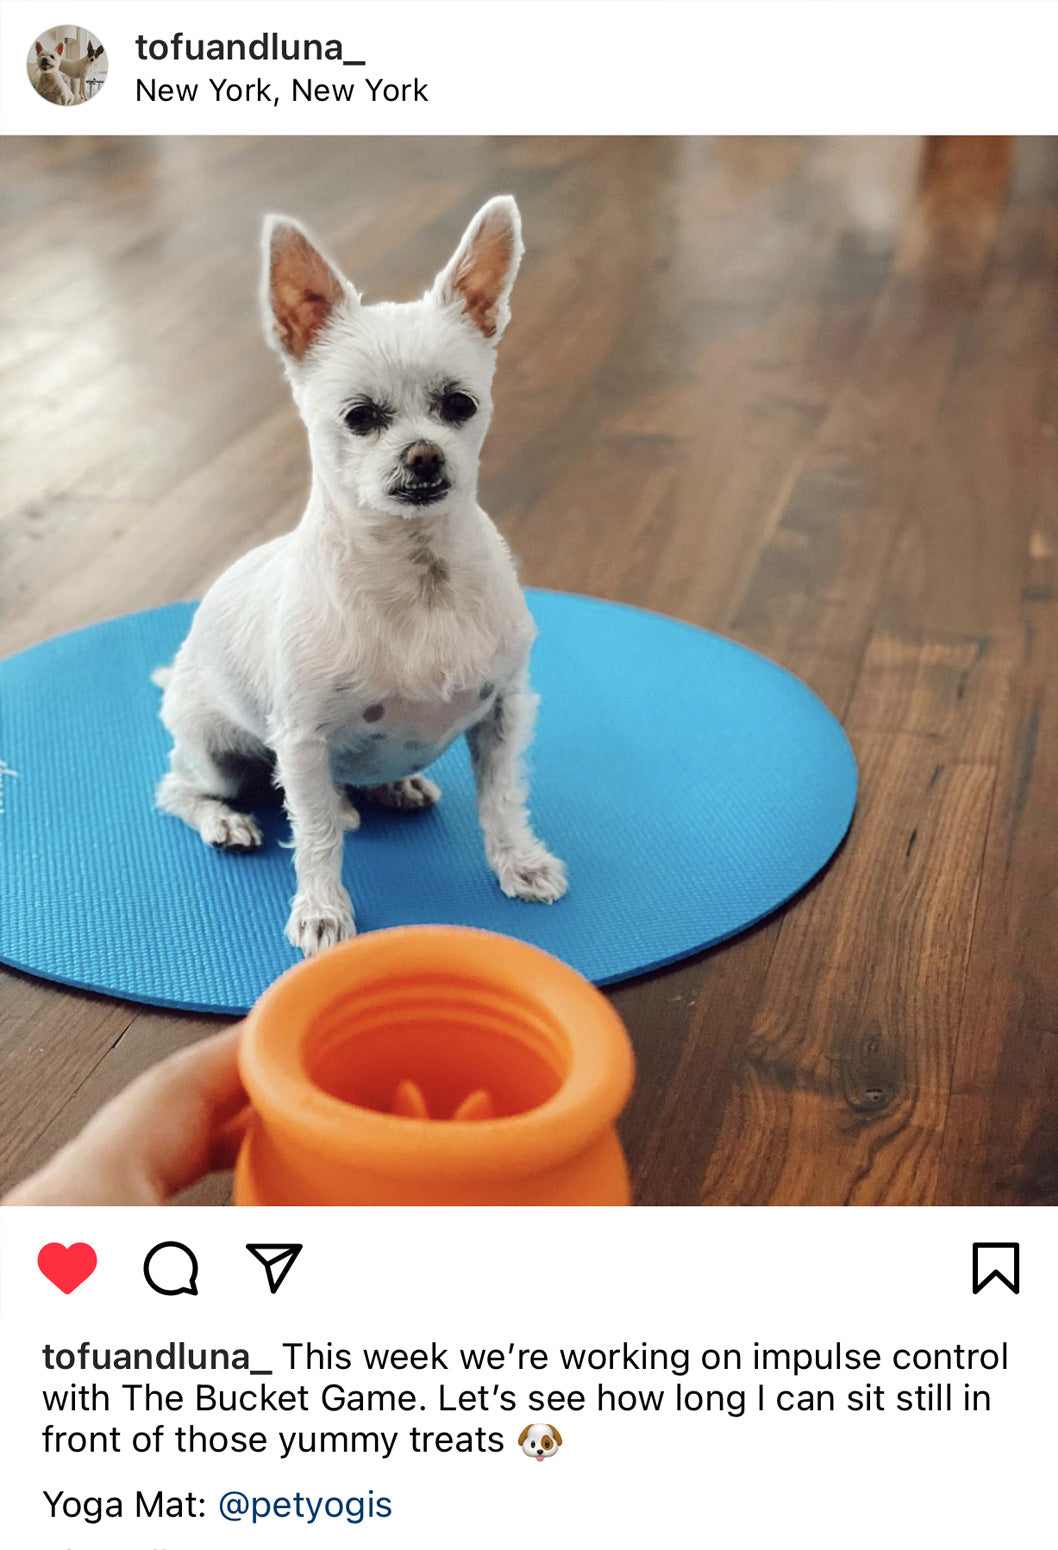 Tofu the dog on a blue round pet yoga mat